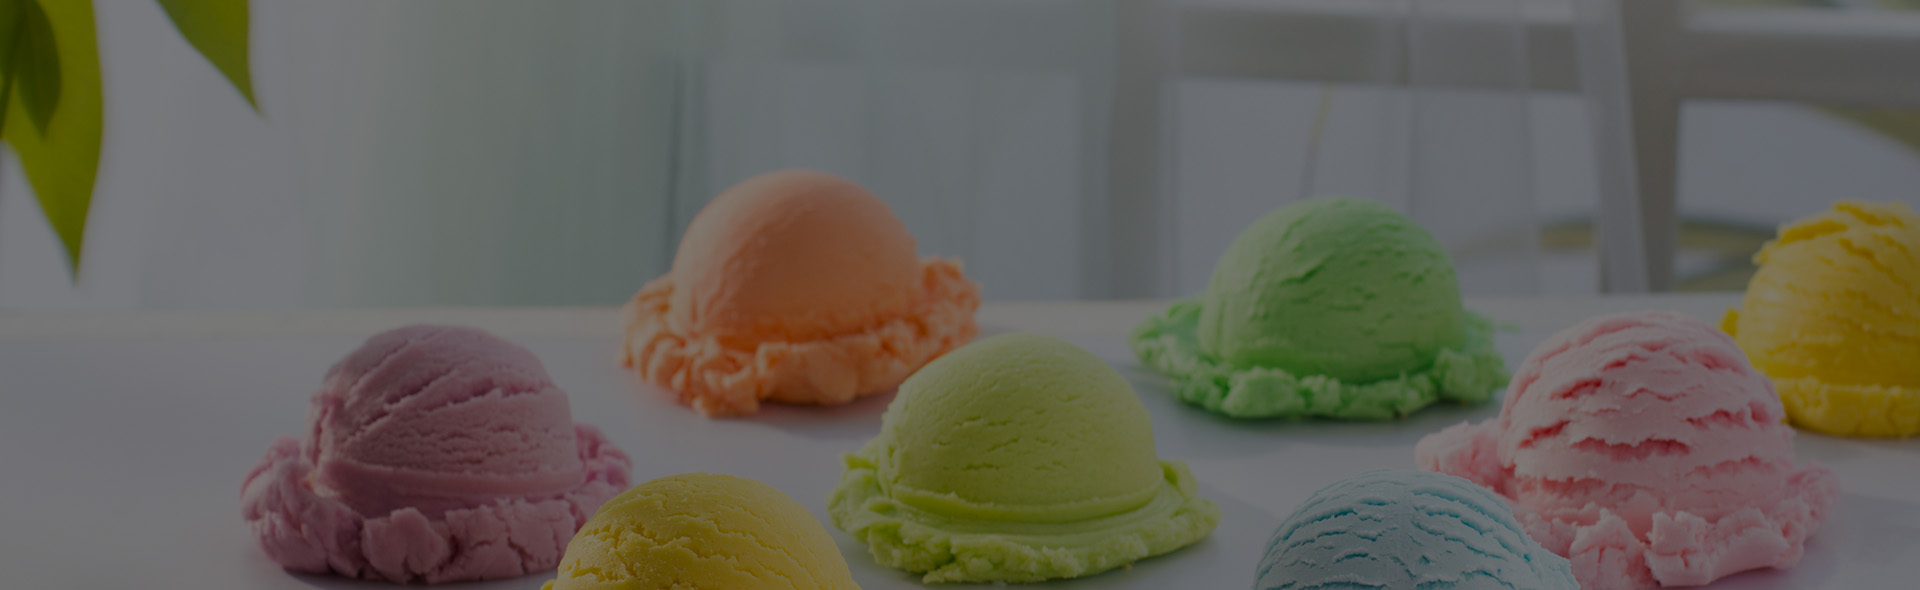 Multiple Flavors of Ice Cream